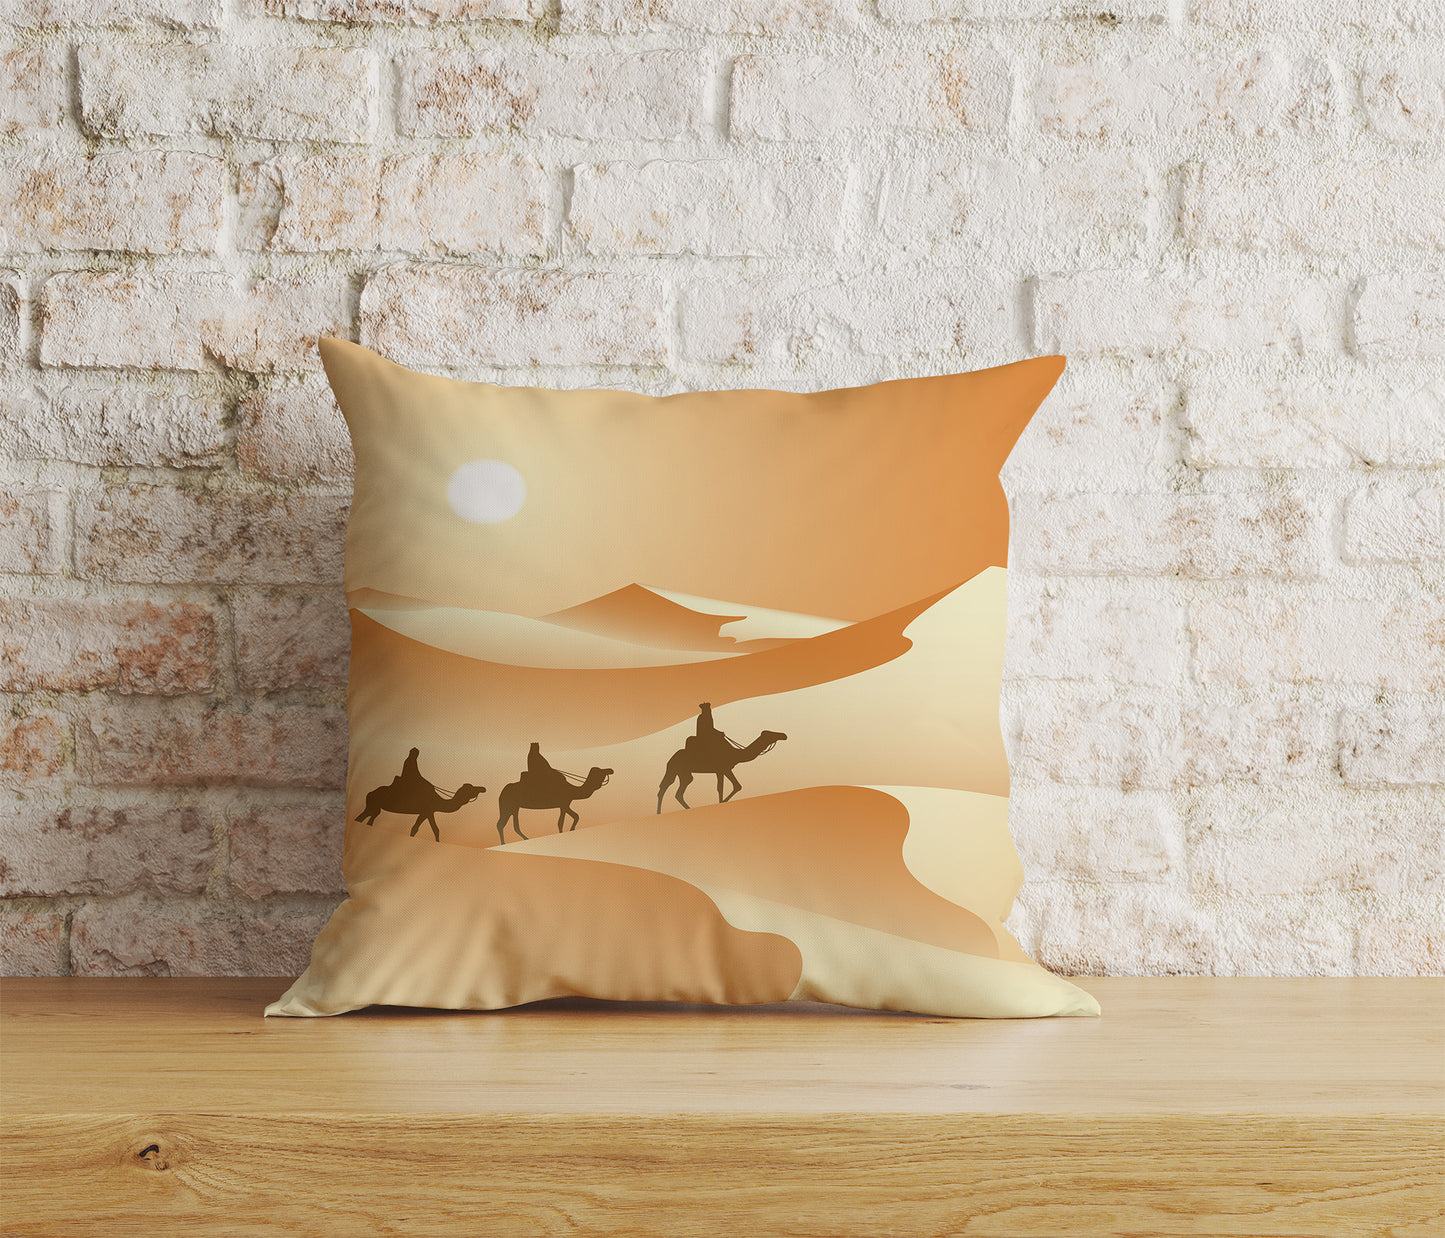 Desert Camel Cushion Cover Muslim Animal Home Decoration